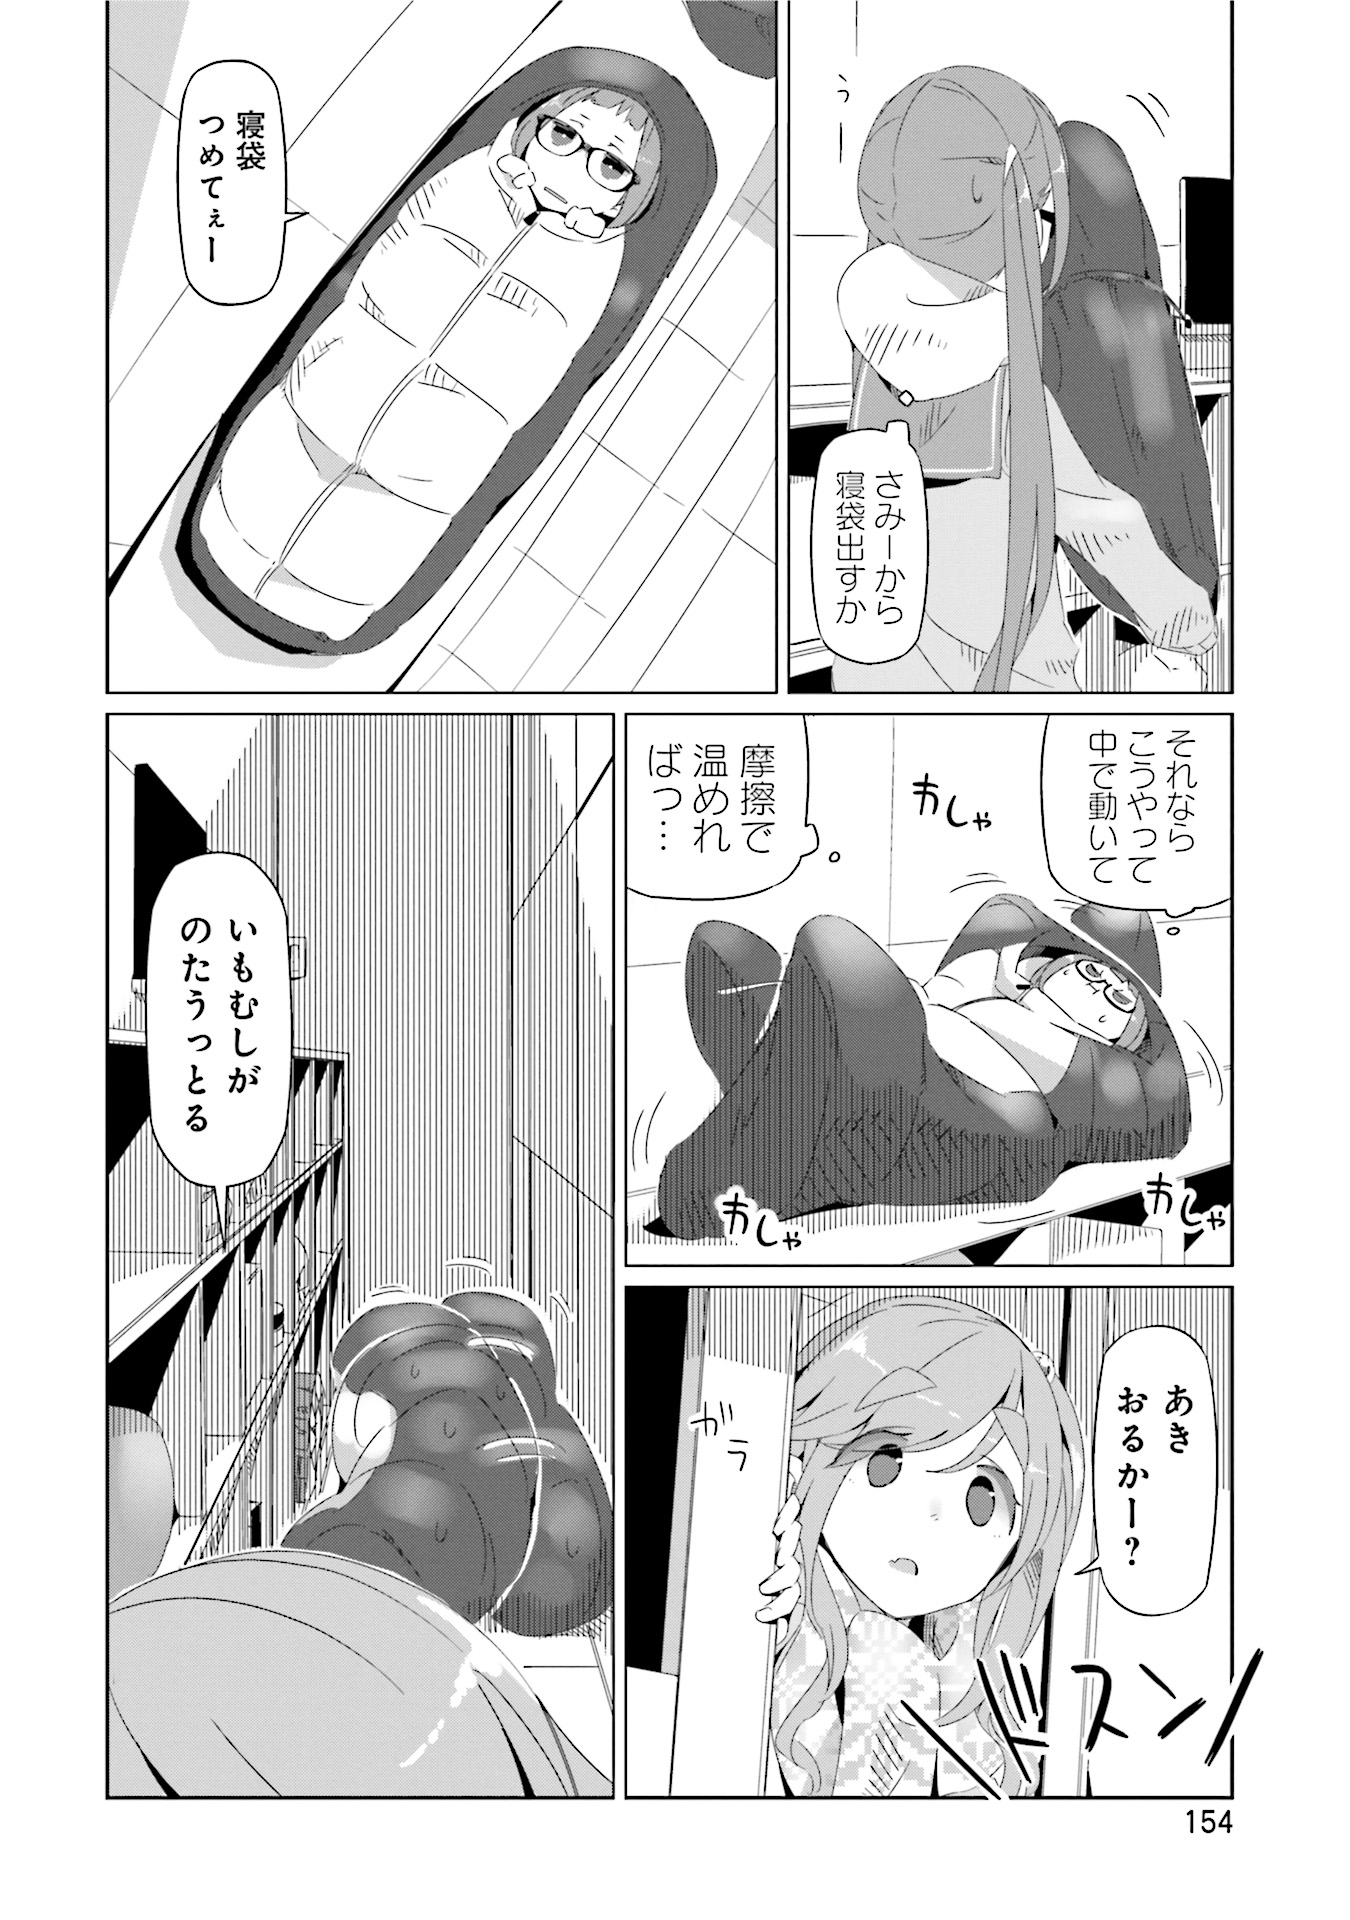 Yuru Camp - Chapter 13 - Page 2